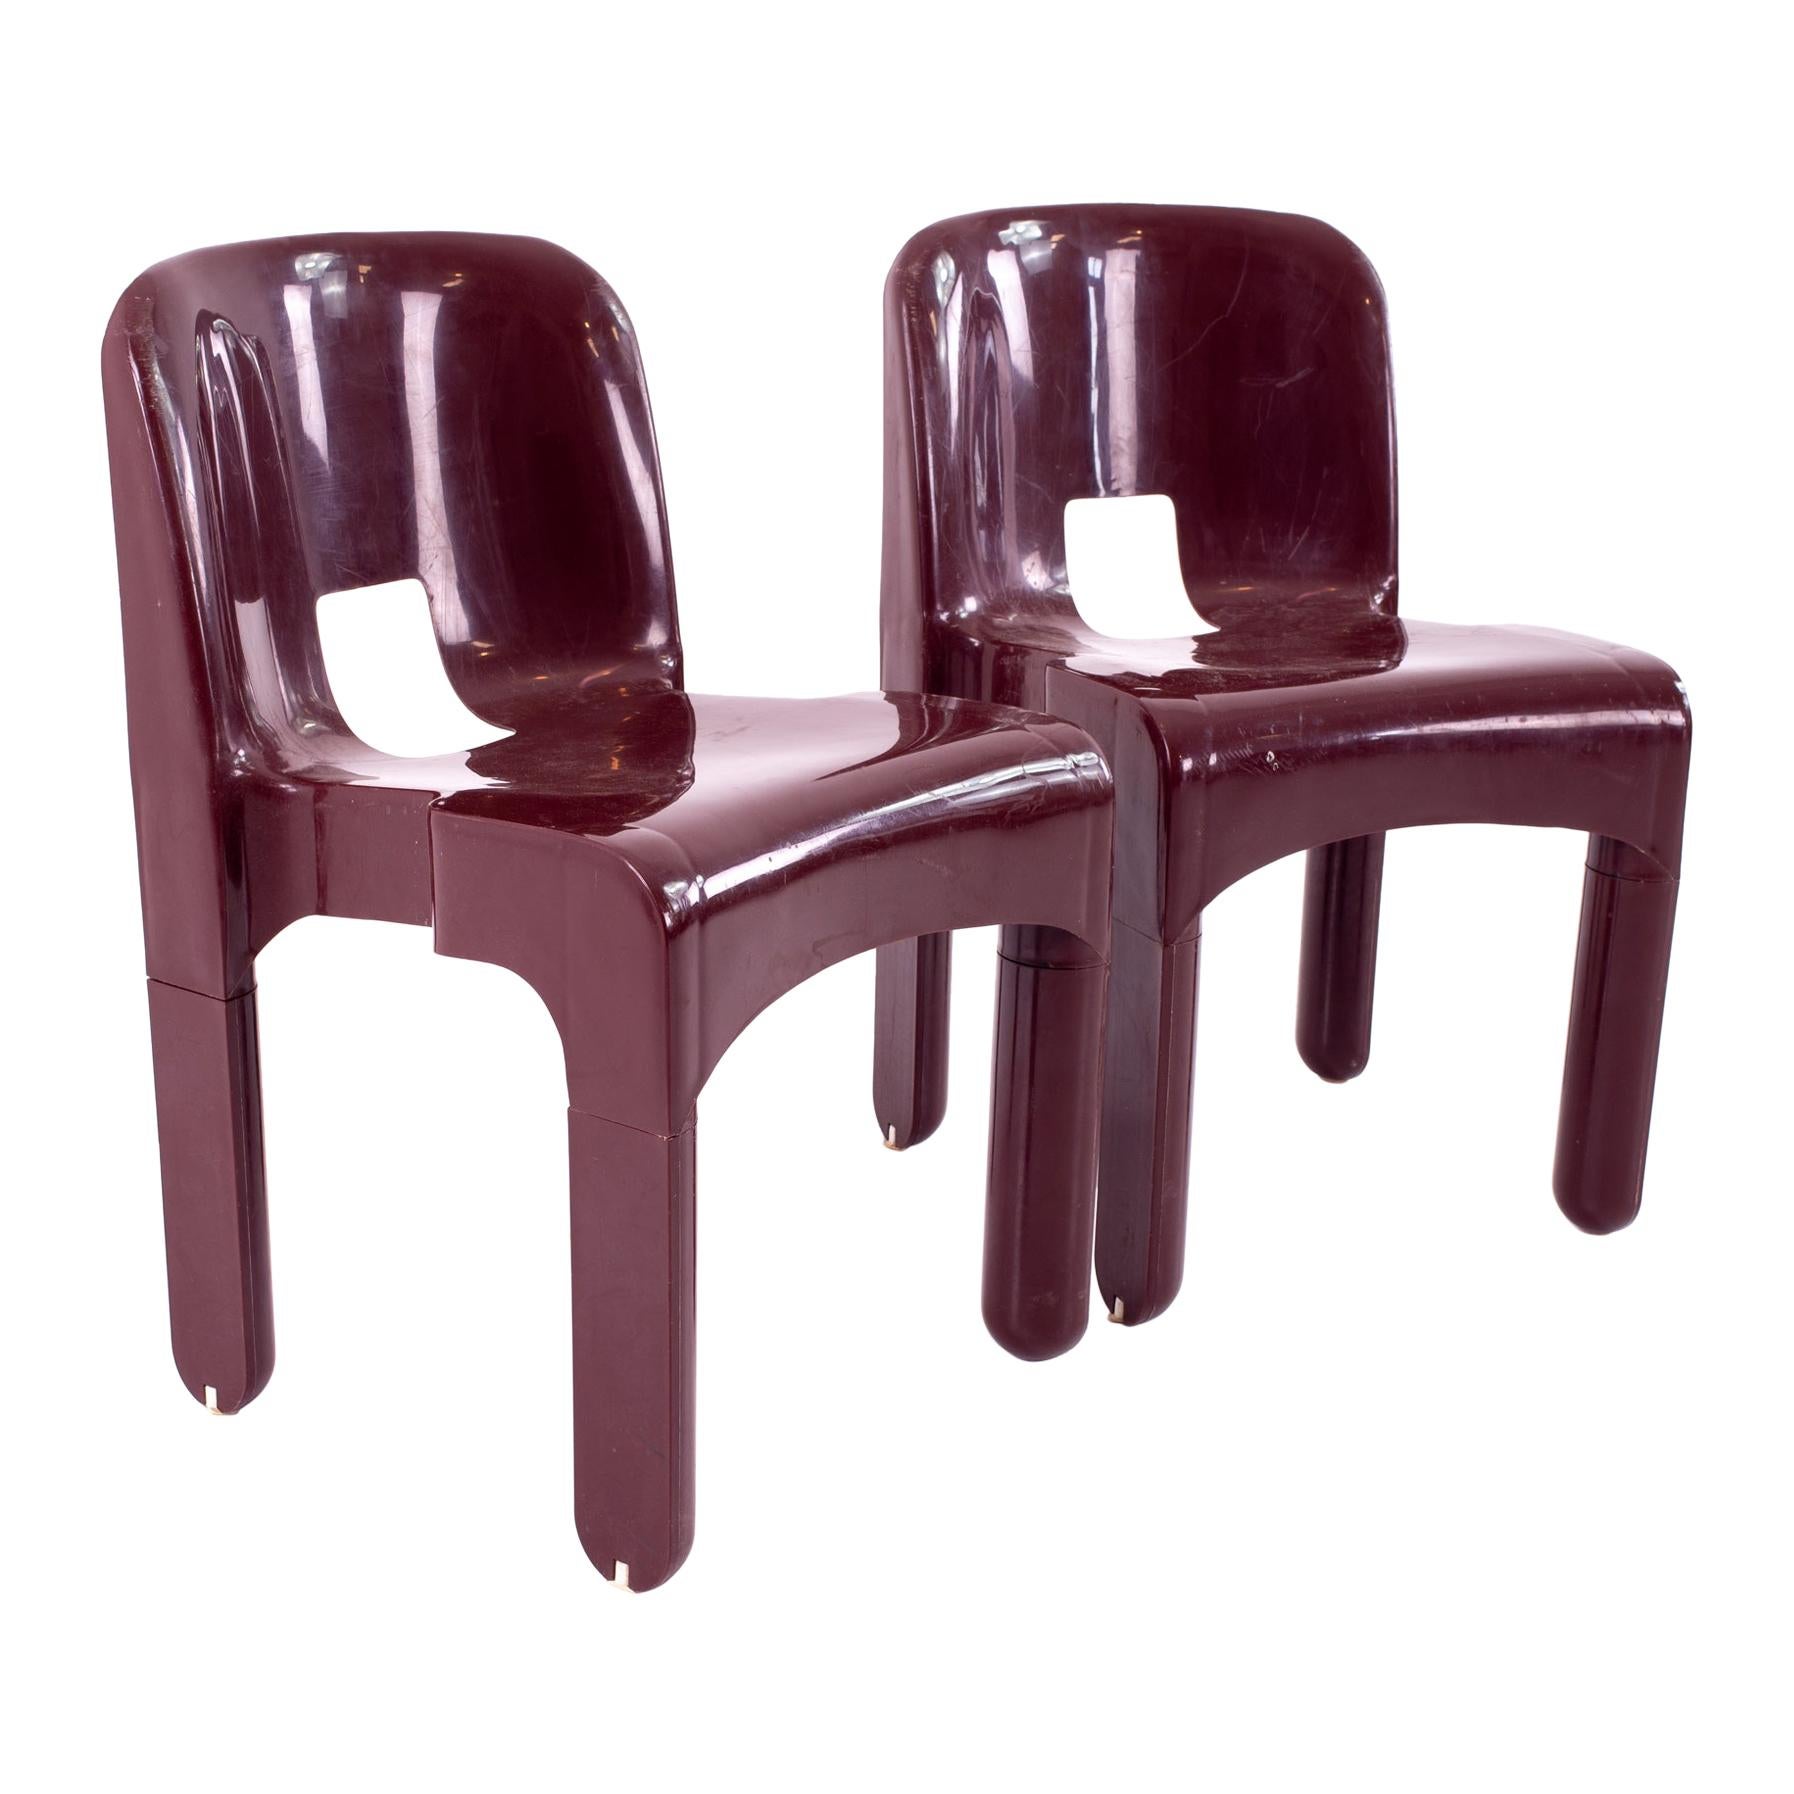 Joe Colombo Kartell Mid Century Plastic Chairs, Pair